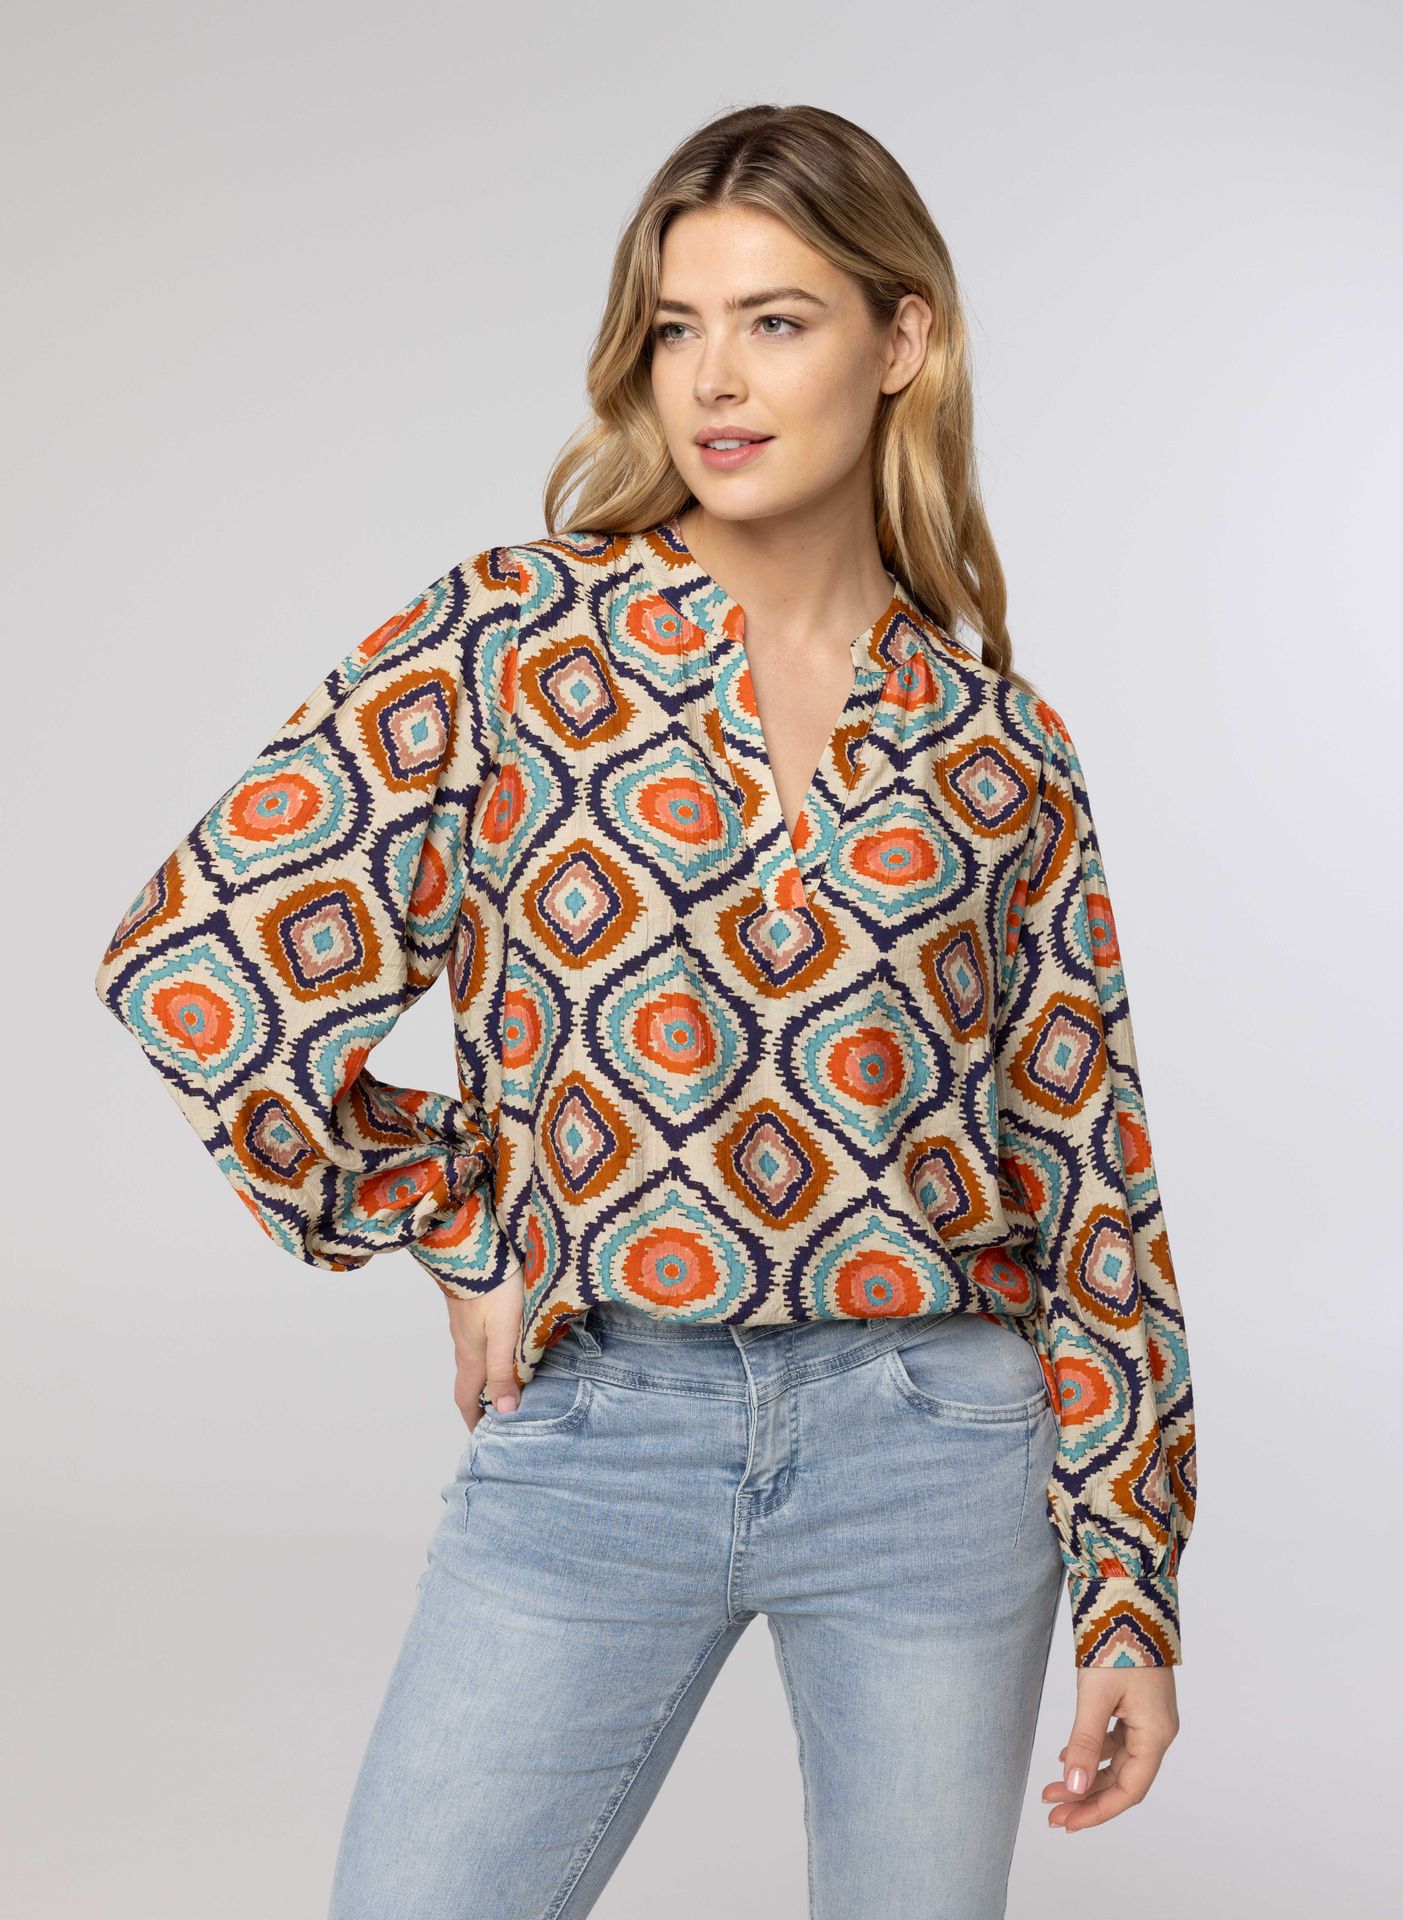 Norah Meerkleurige blouse multicolor 214293-002